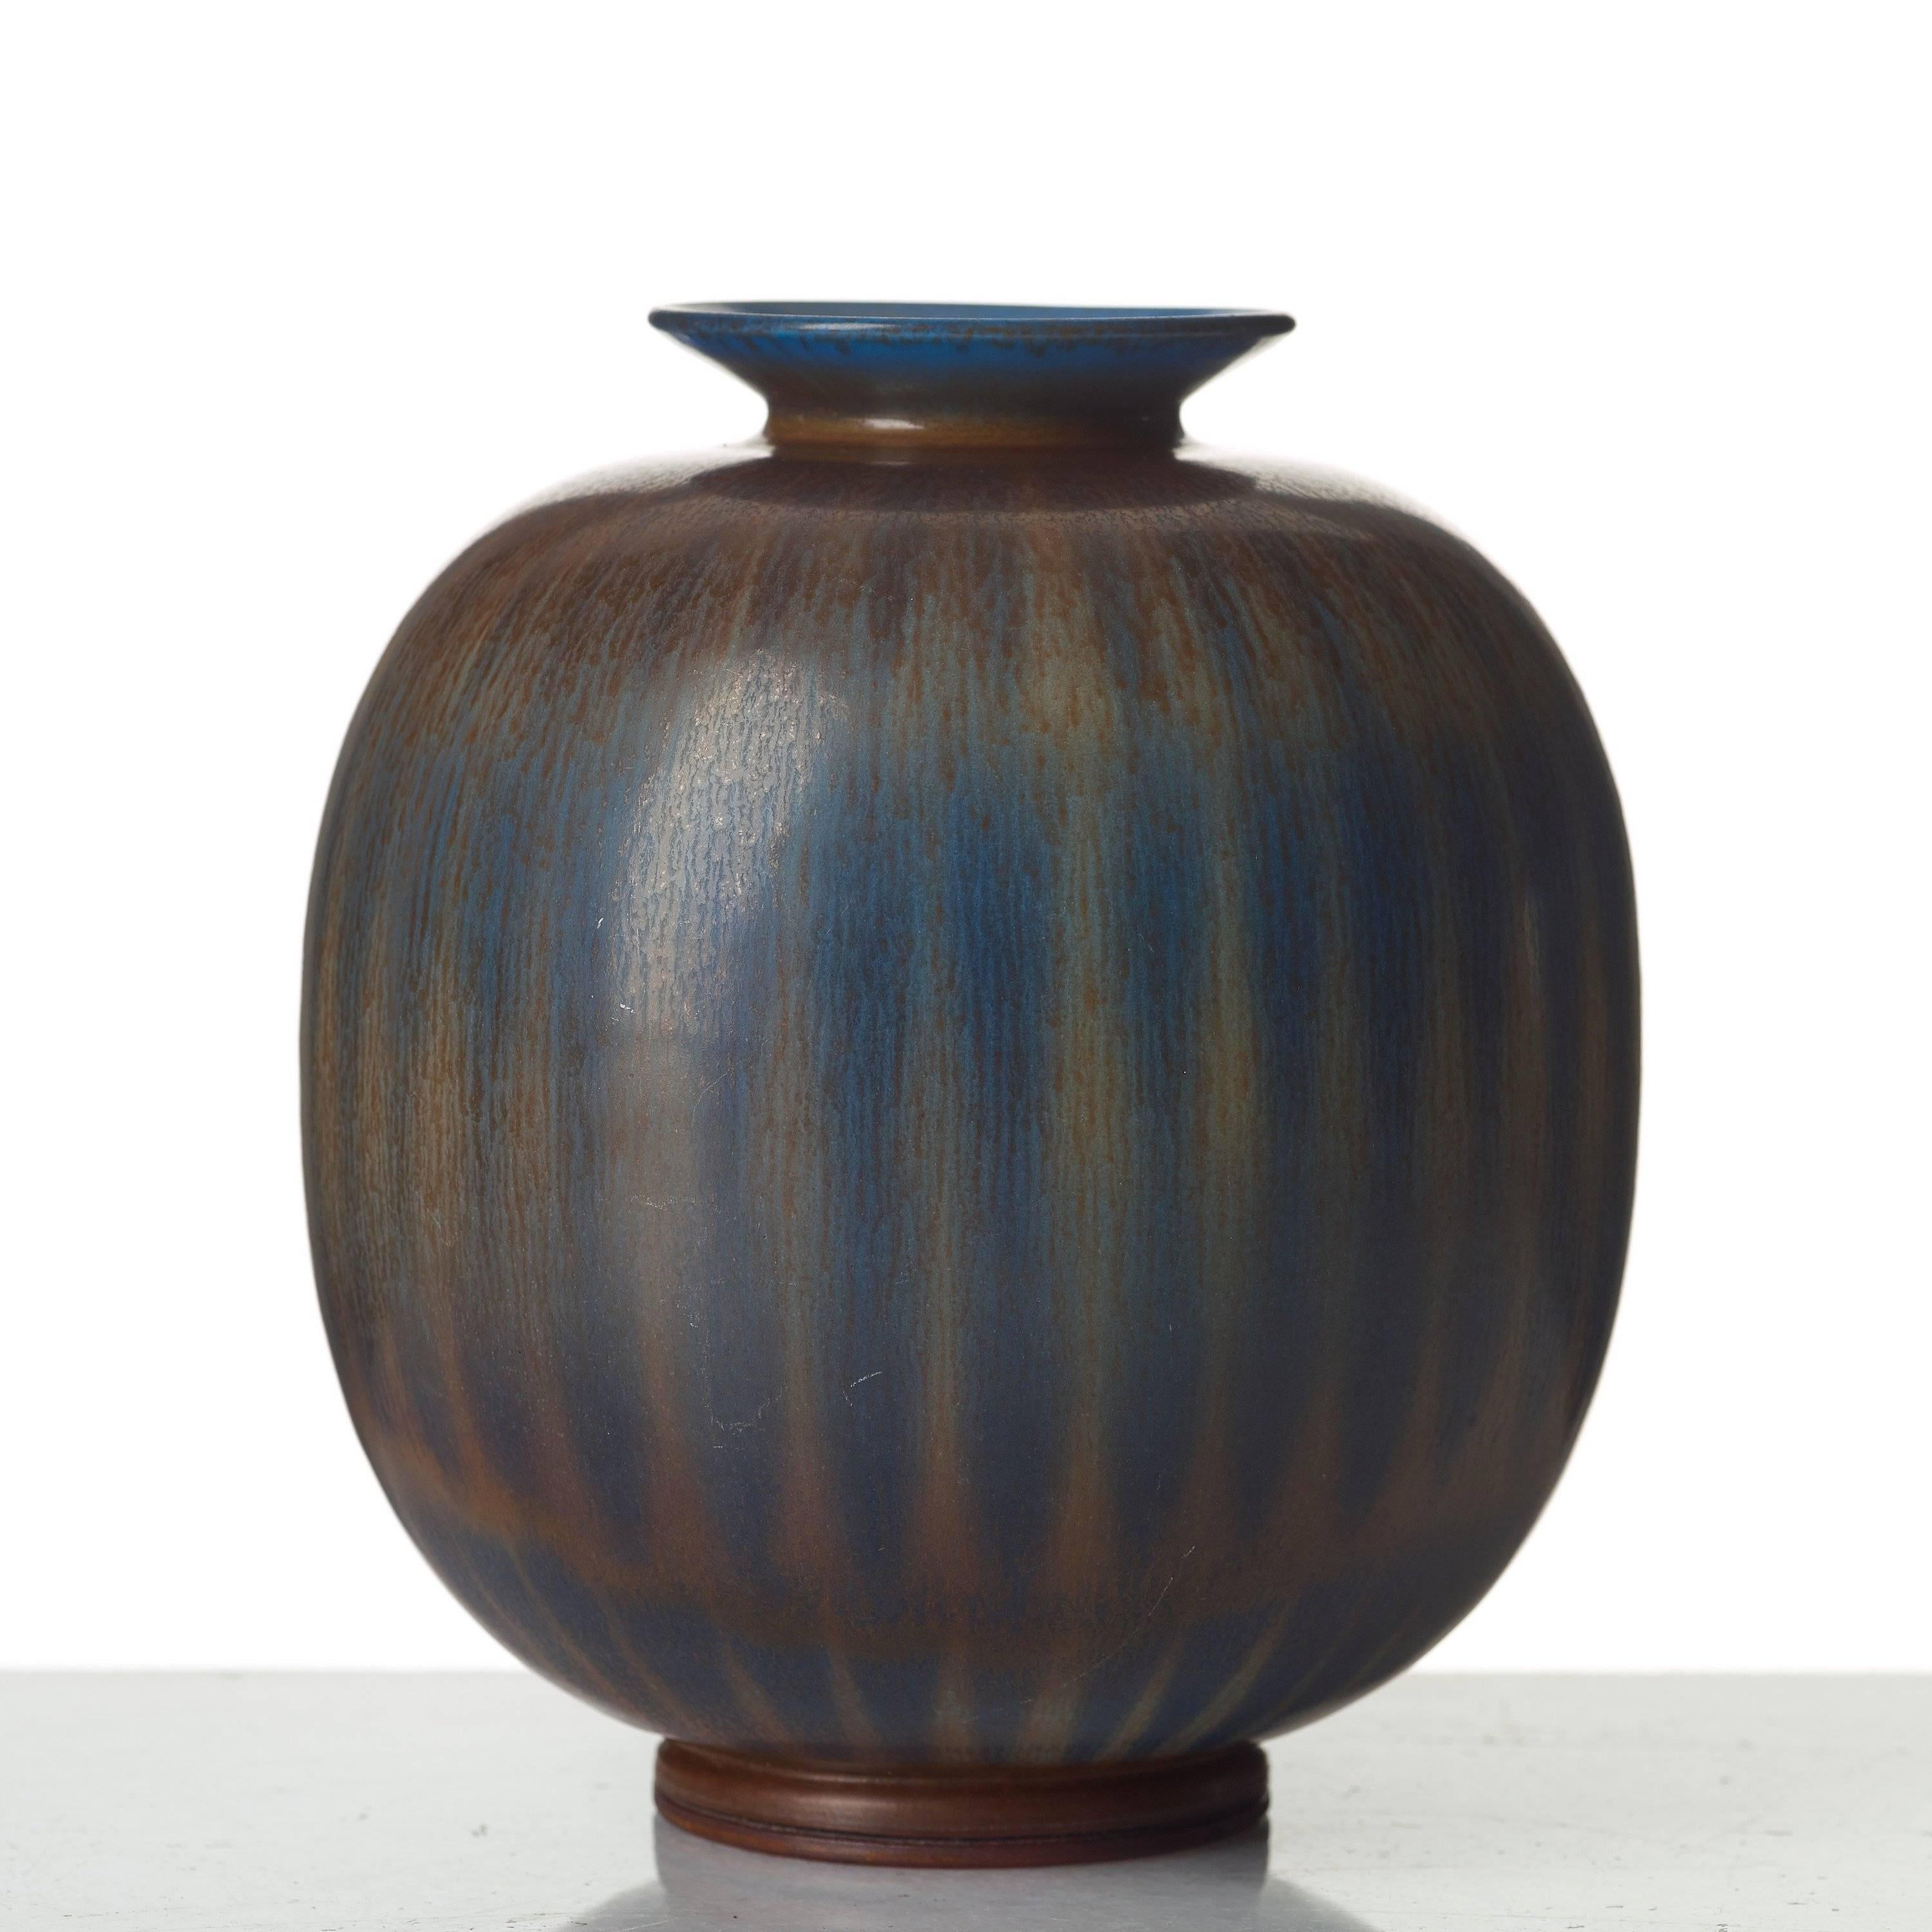 Unique stoneware vase by Berndt Friberg for Gustavsberg 1960 with harefur glaze.
Measures: Height 17.5cm/6.9?, diameter 16cm/6.3